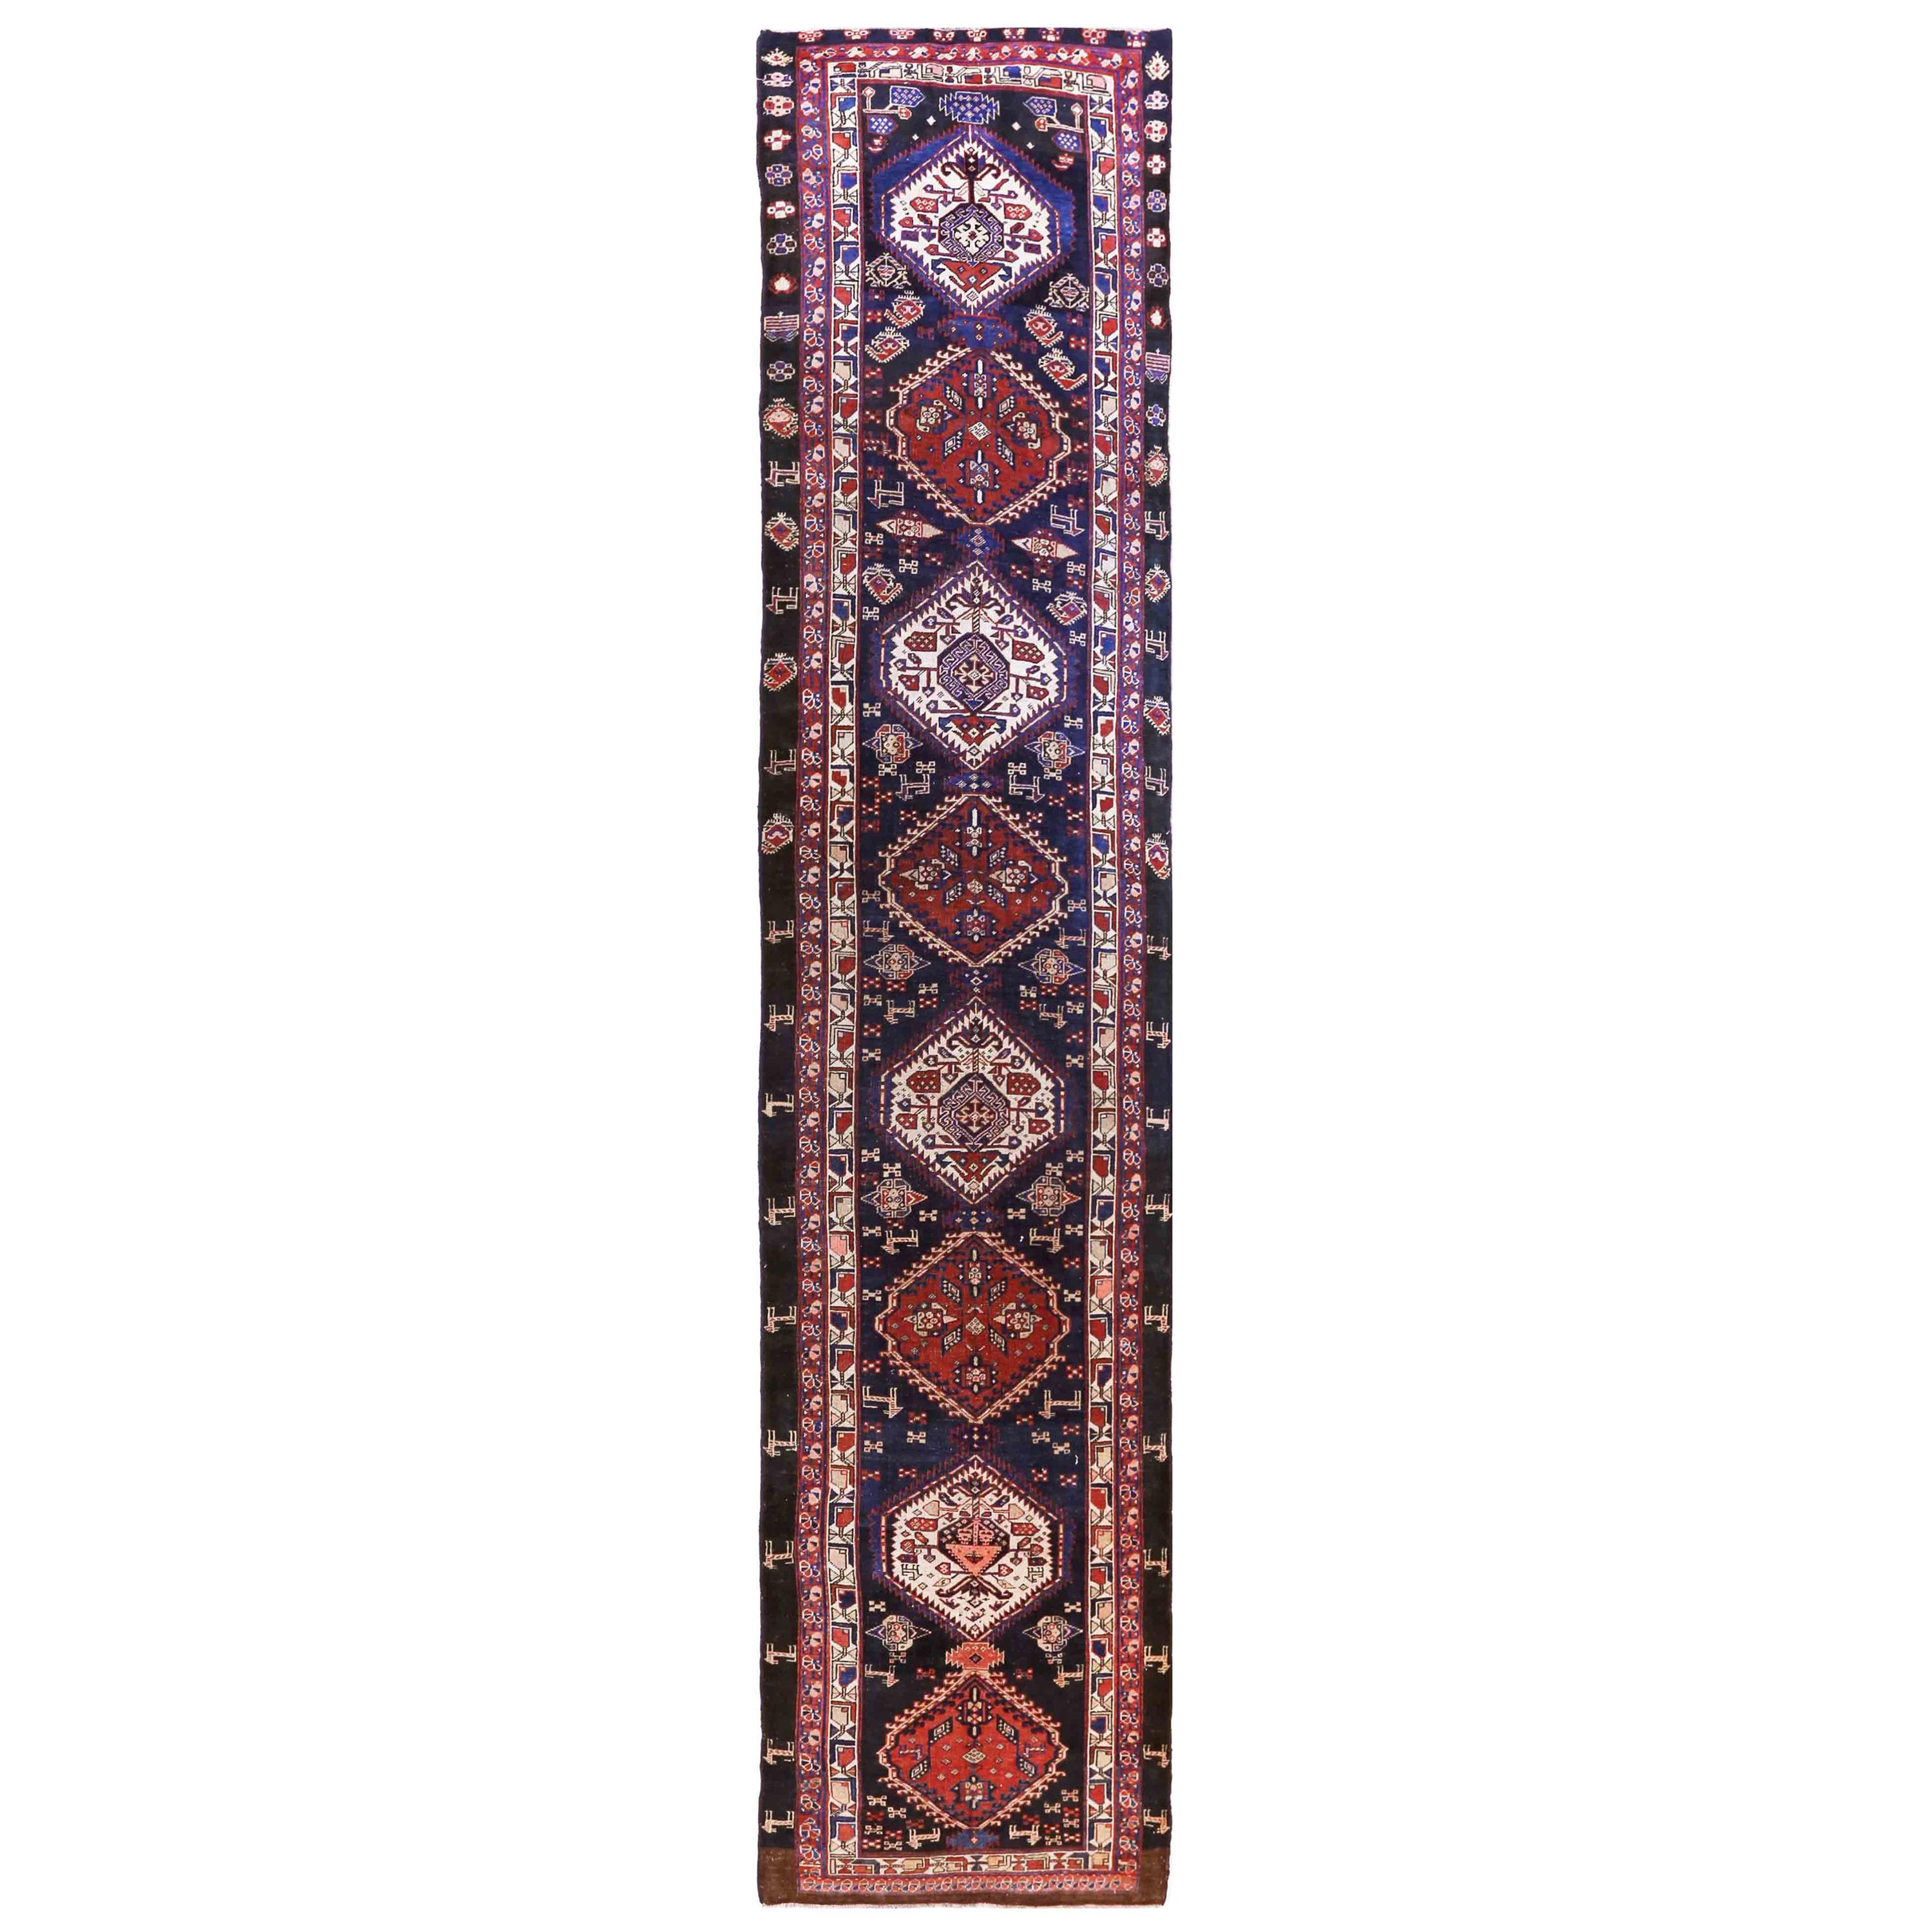 Antique Persian Rug Azerbaijan Design with Magnificent Jewel Patterns circa 1900